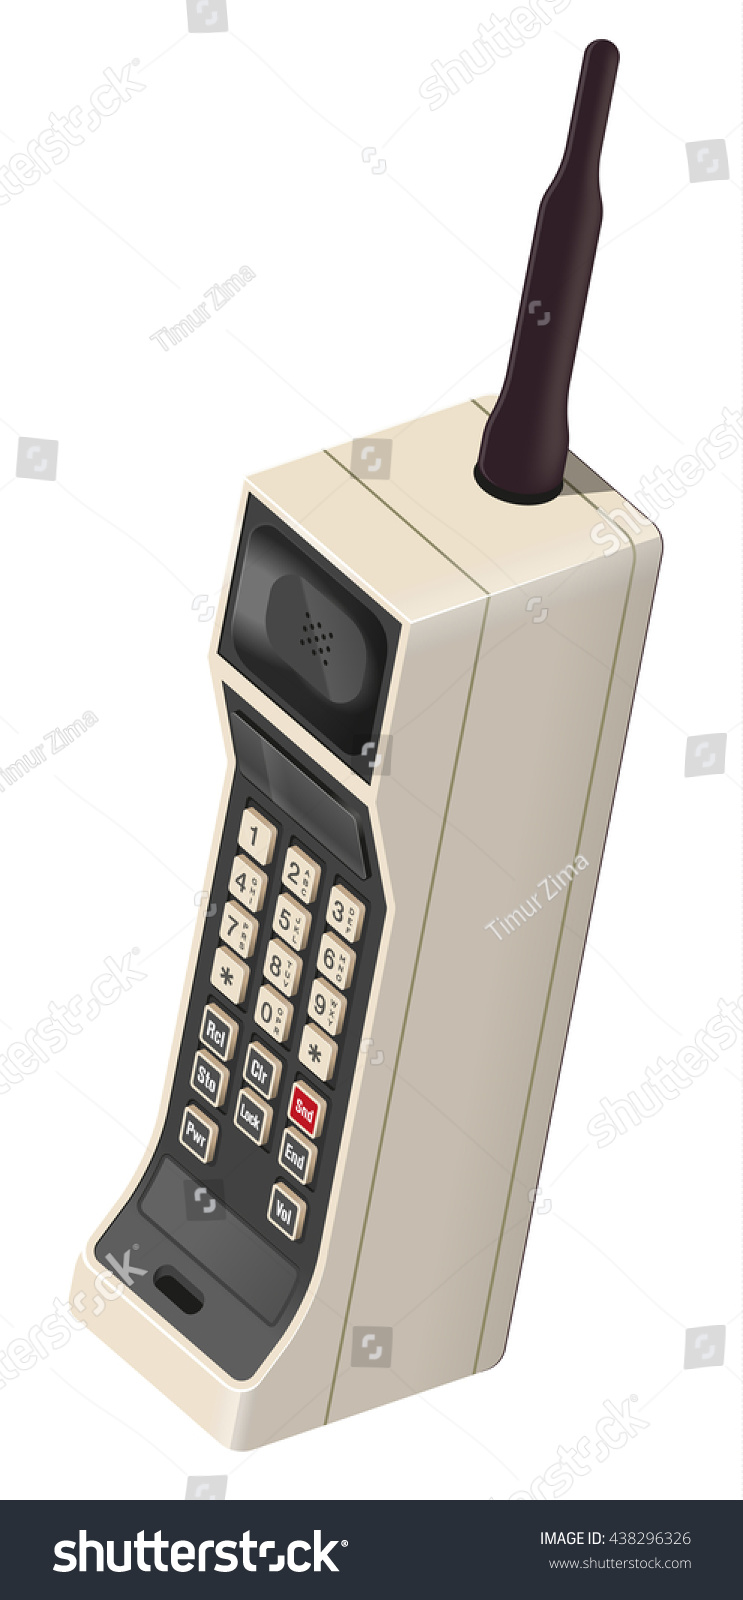 Retro vintage mobil mobiltelefon 80'erne/telefon/vektor Stock-vektor (royaltyfri) 438296326